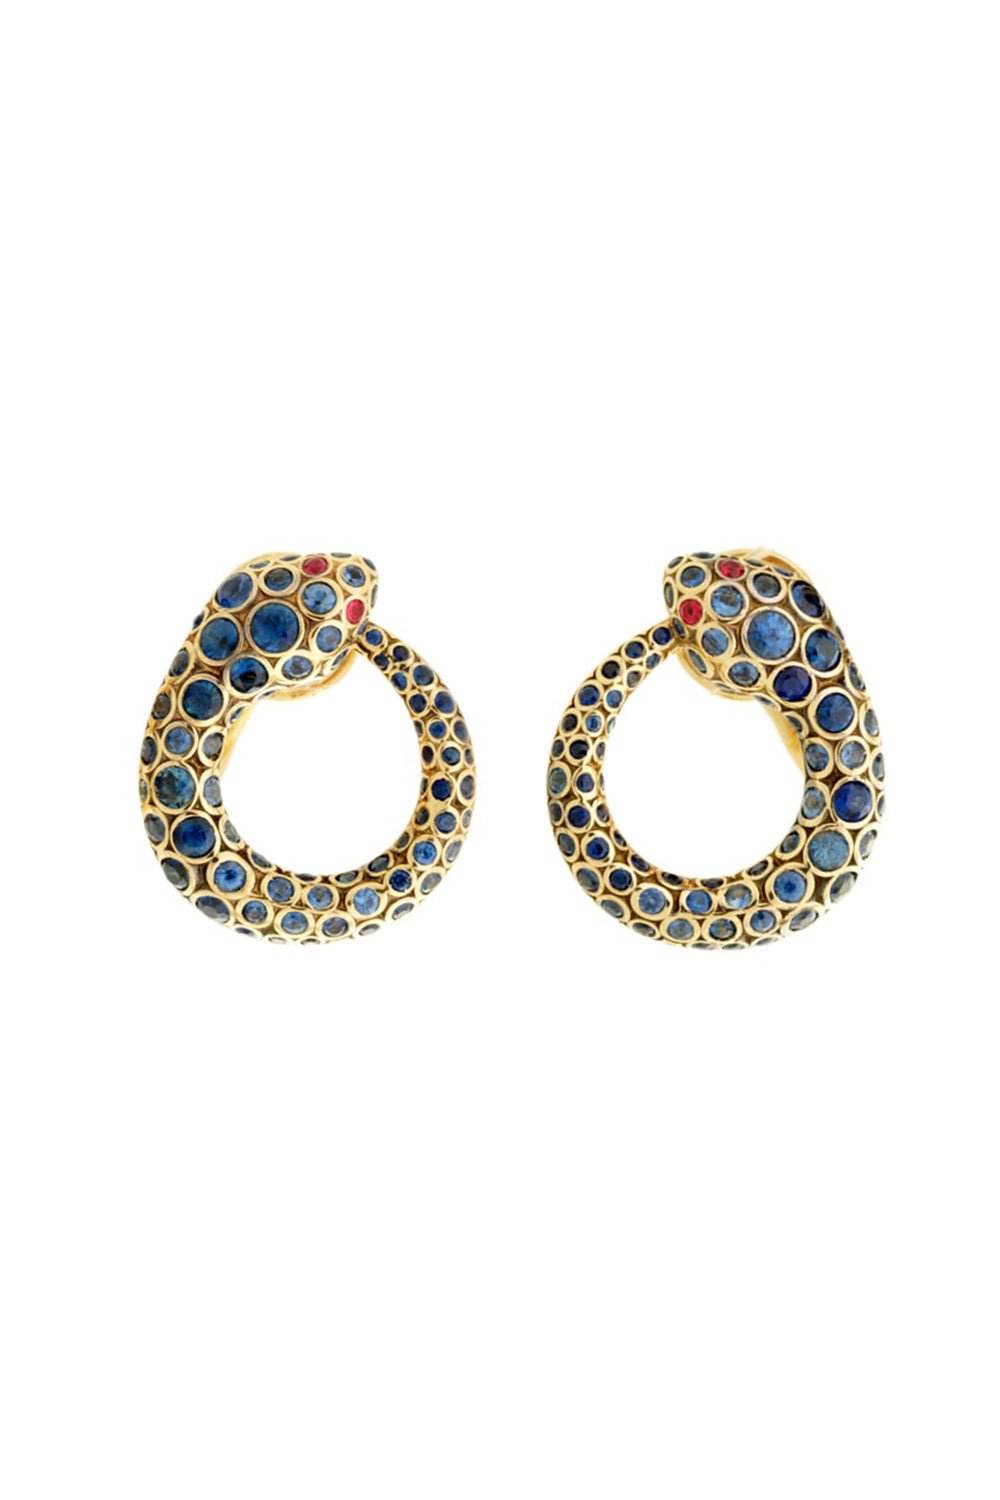 SELIM MOUZANNAR-XS Basilik Sapphire Spinel Earrings-YELLOW GOLD